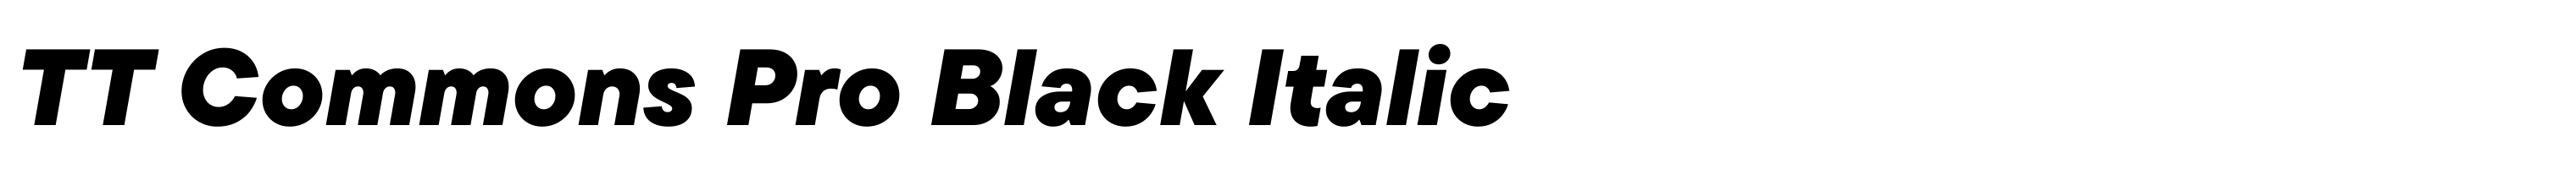 TT Commons Pro Black Italic